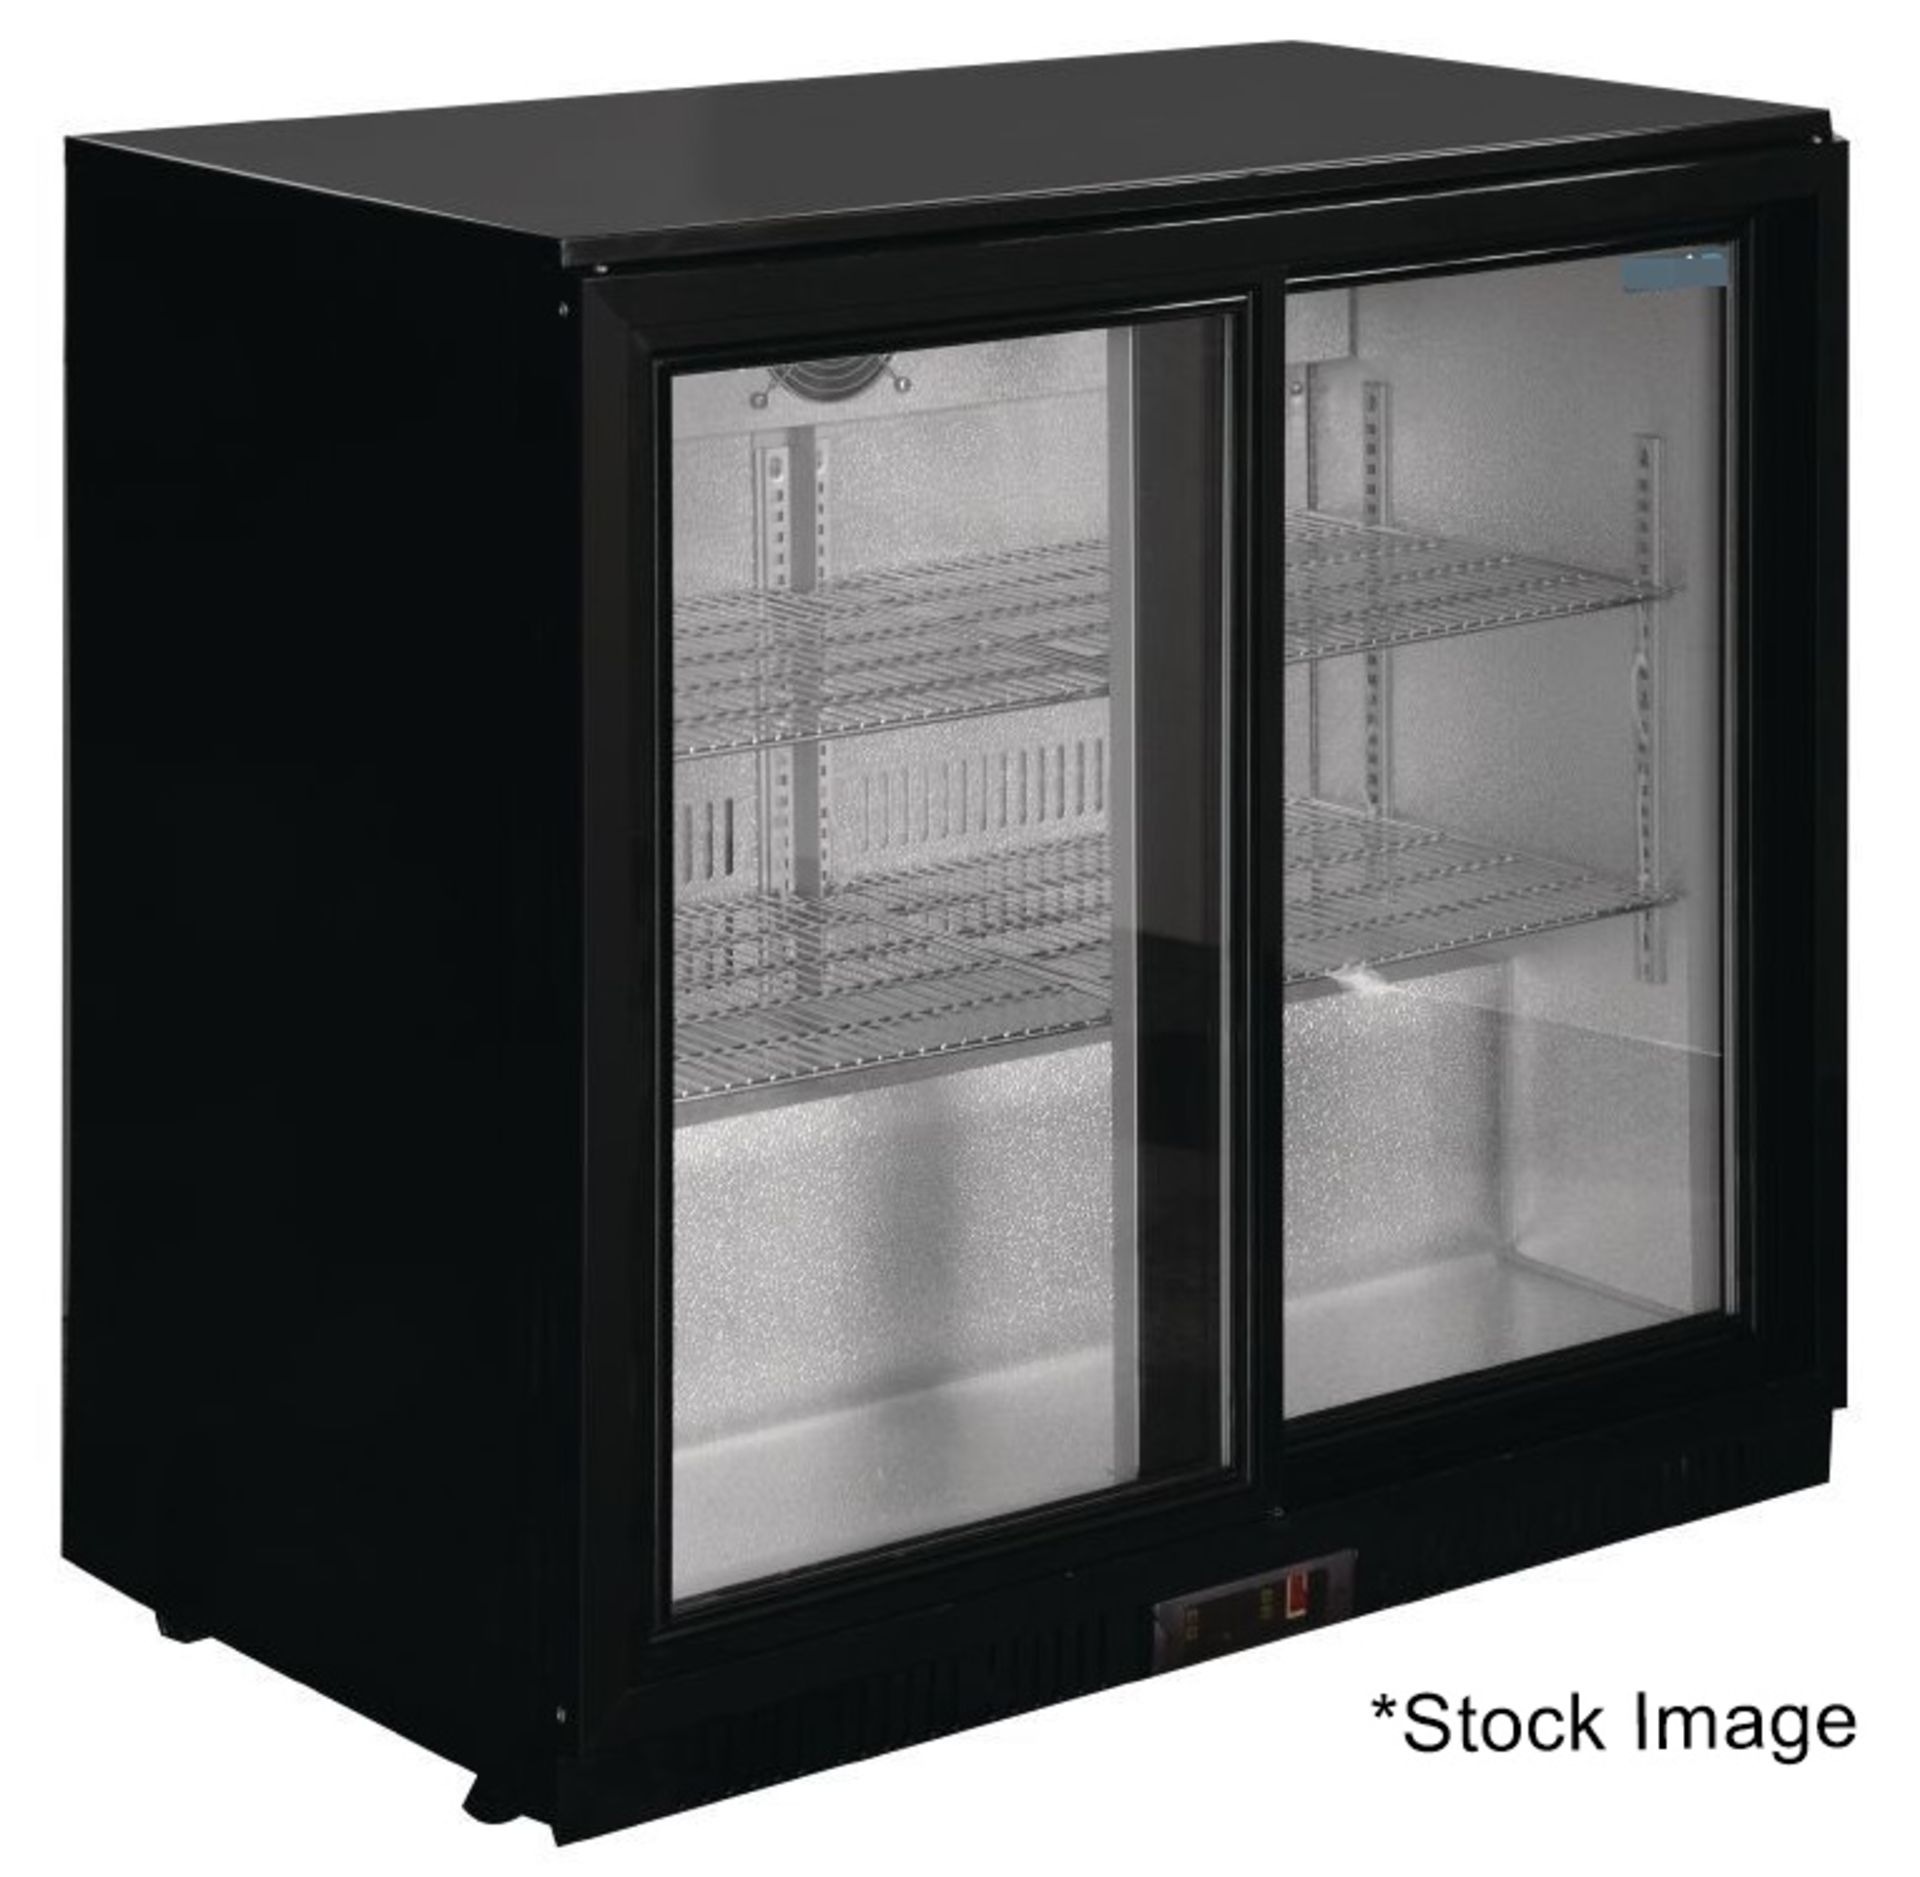 1 x ADEXA Black Back Bar Cooler With 2 Sliding Glass Doors 220 Litre Capacity - Image 5 of 5